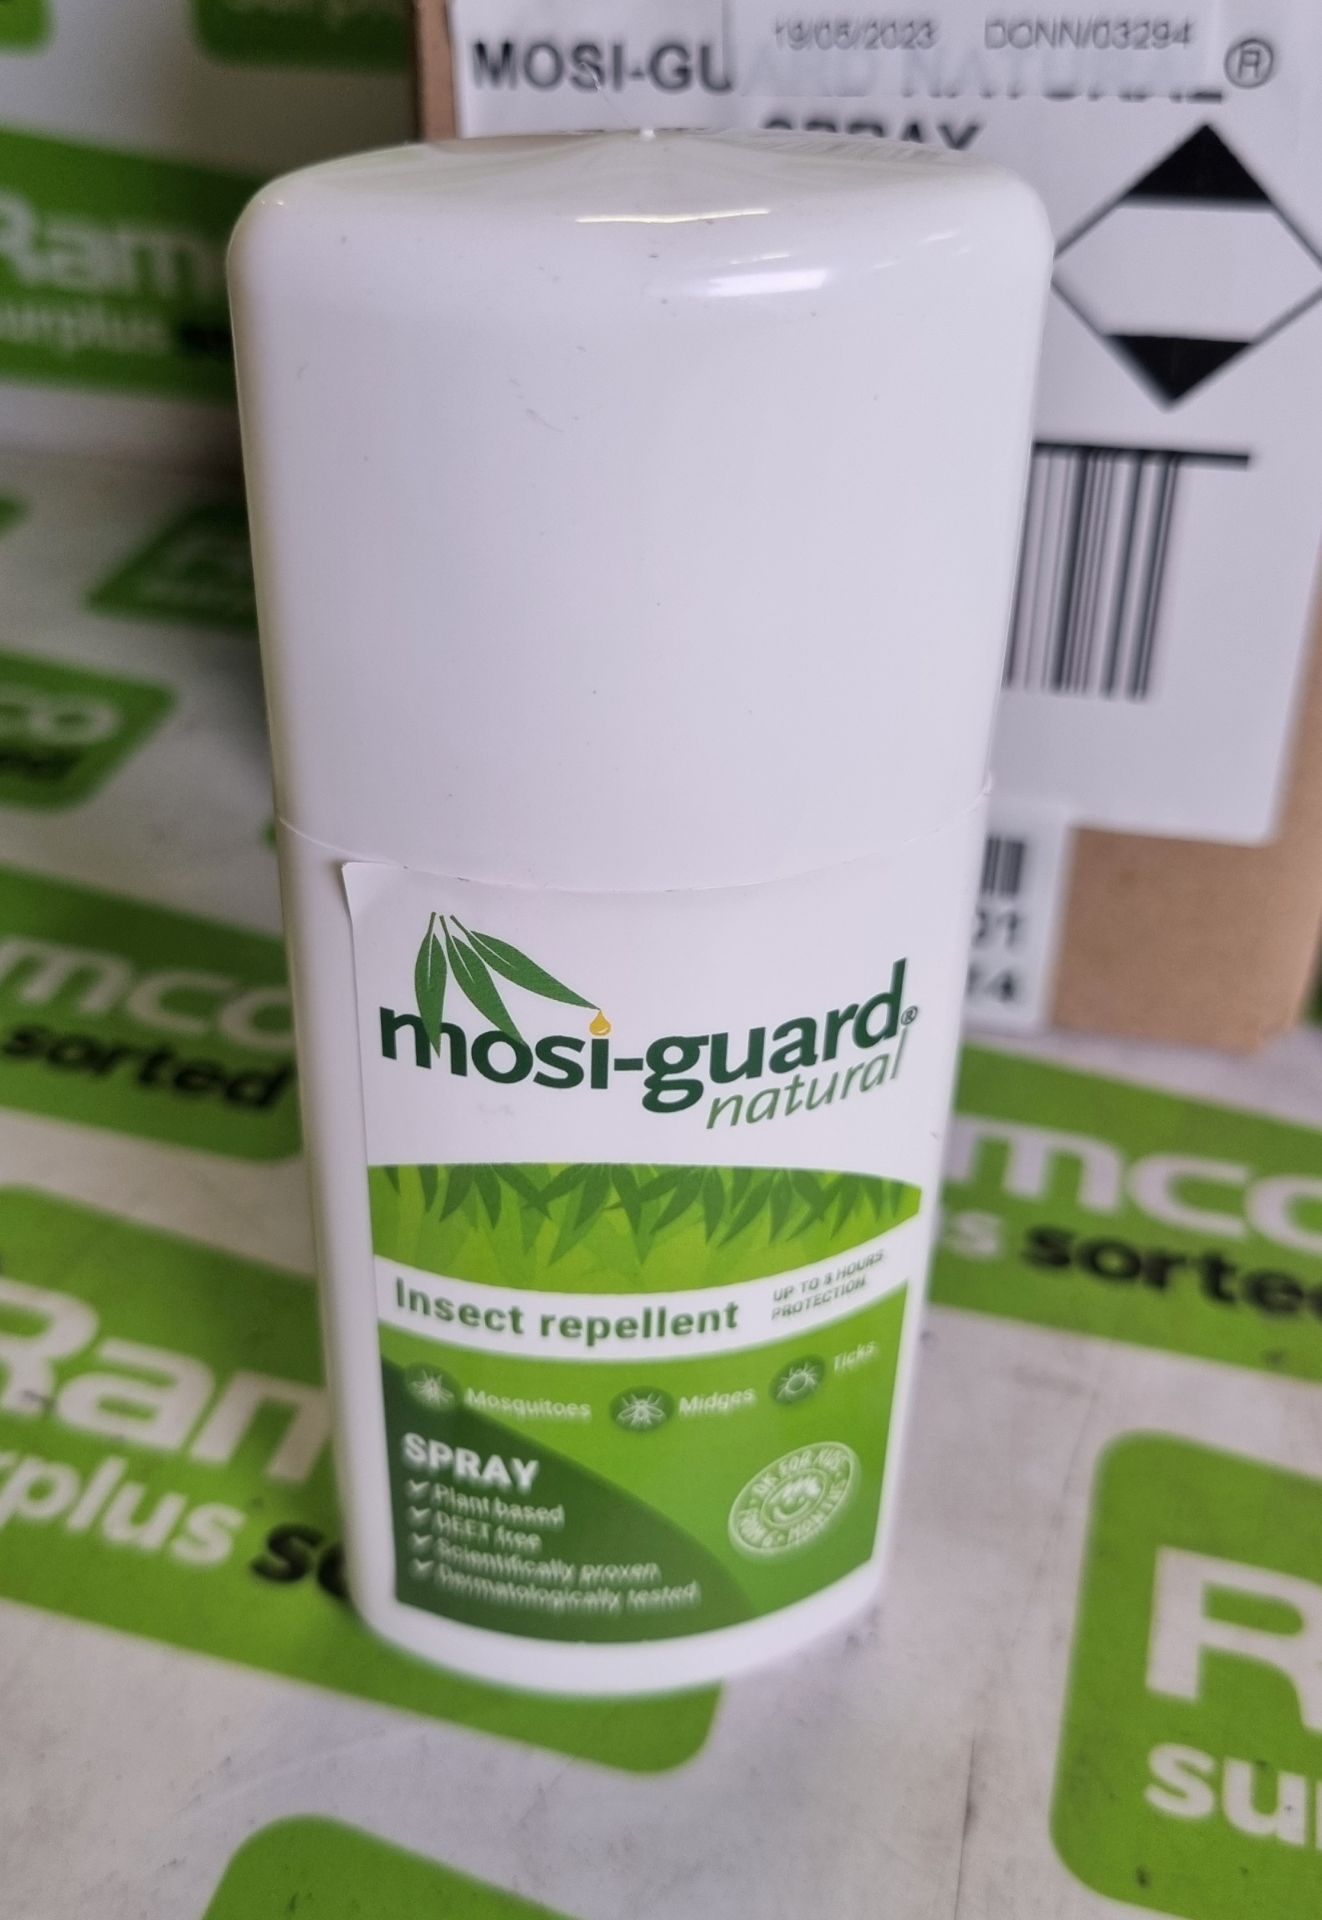 2x boxes of Mosi-Guard Natural Spray 75ml - 6 bottles per box - Bild 3 aus 4